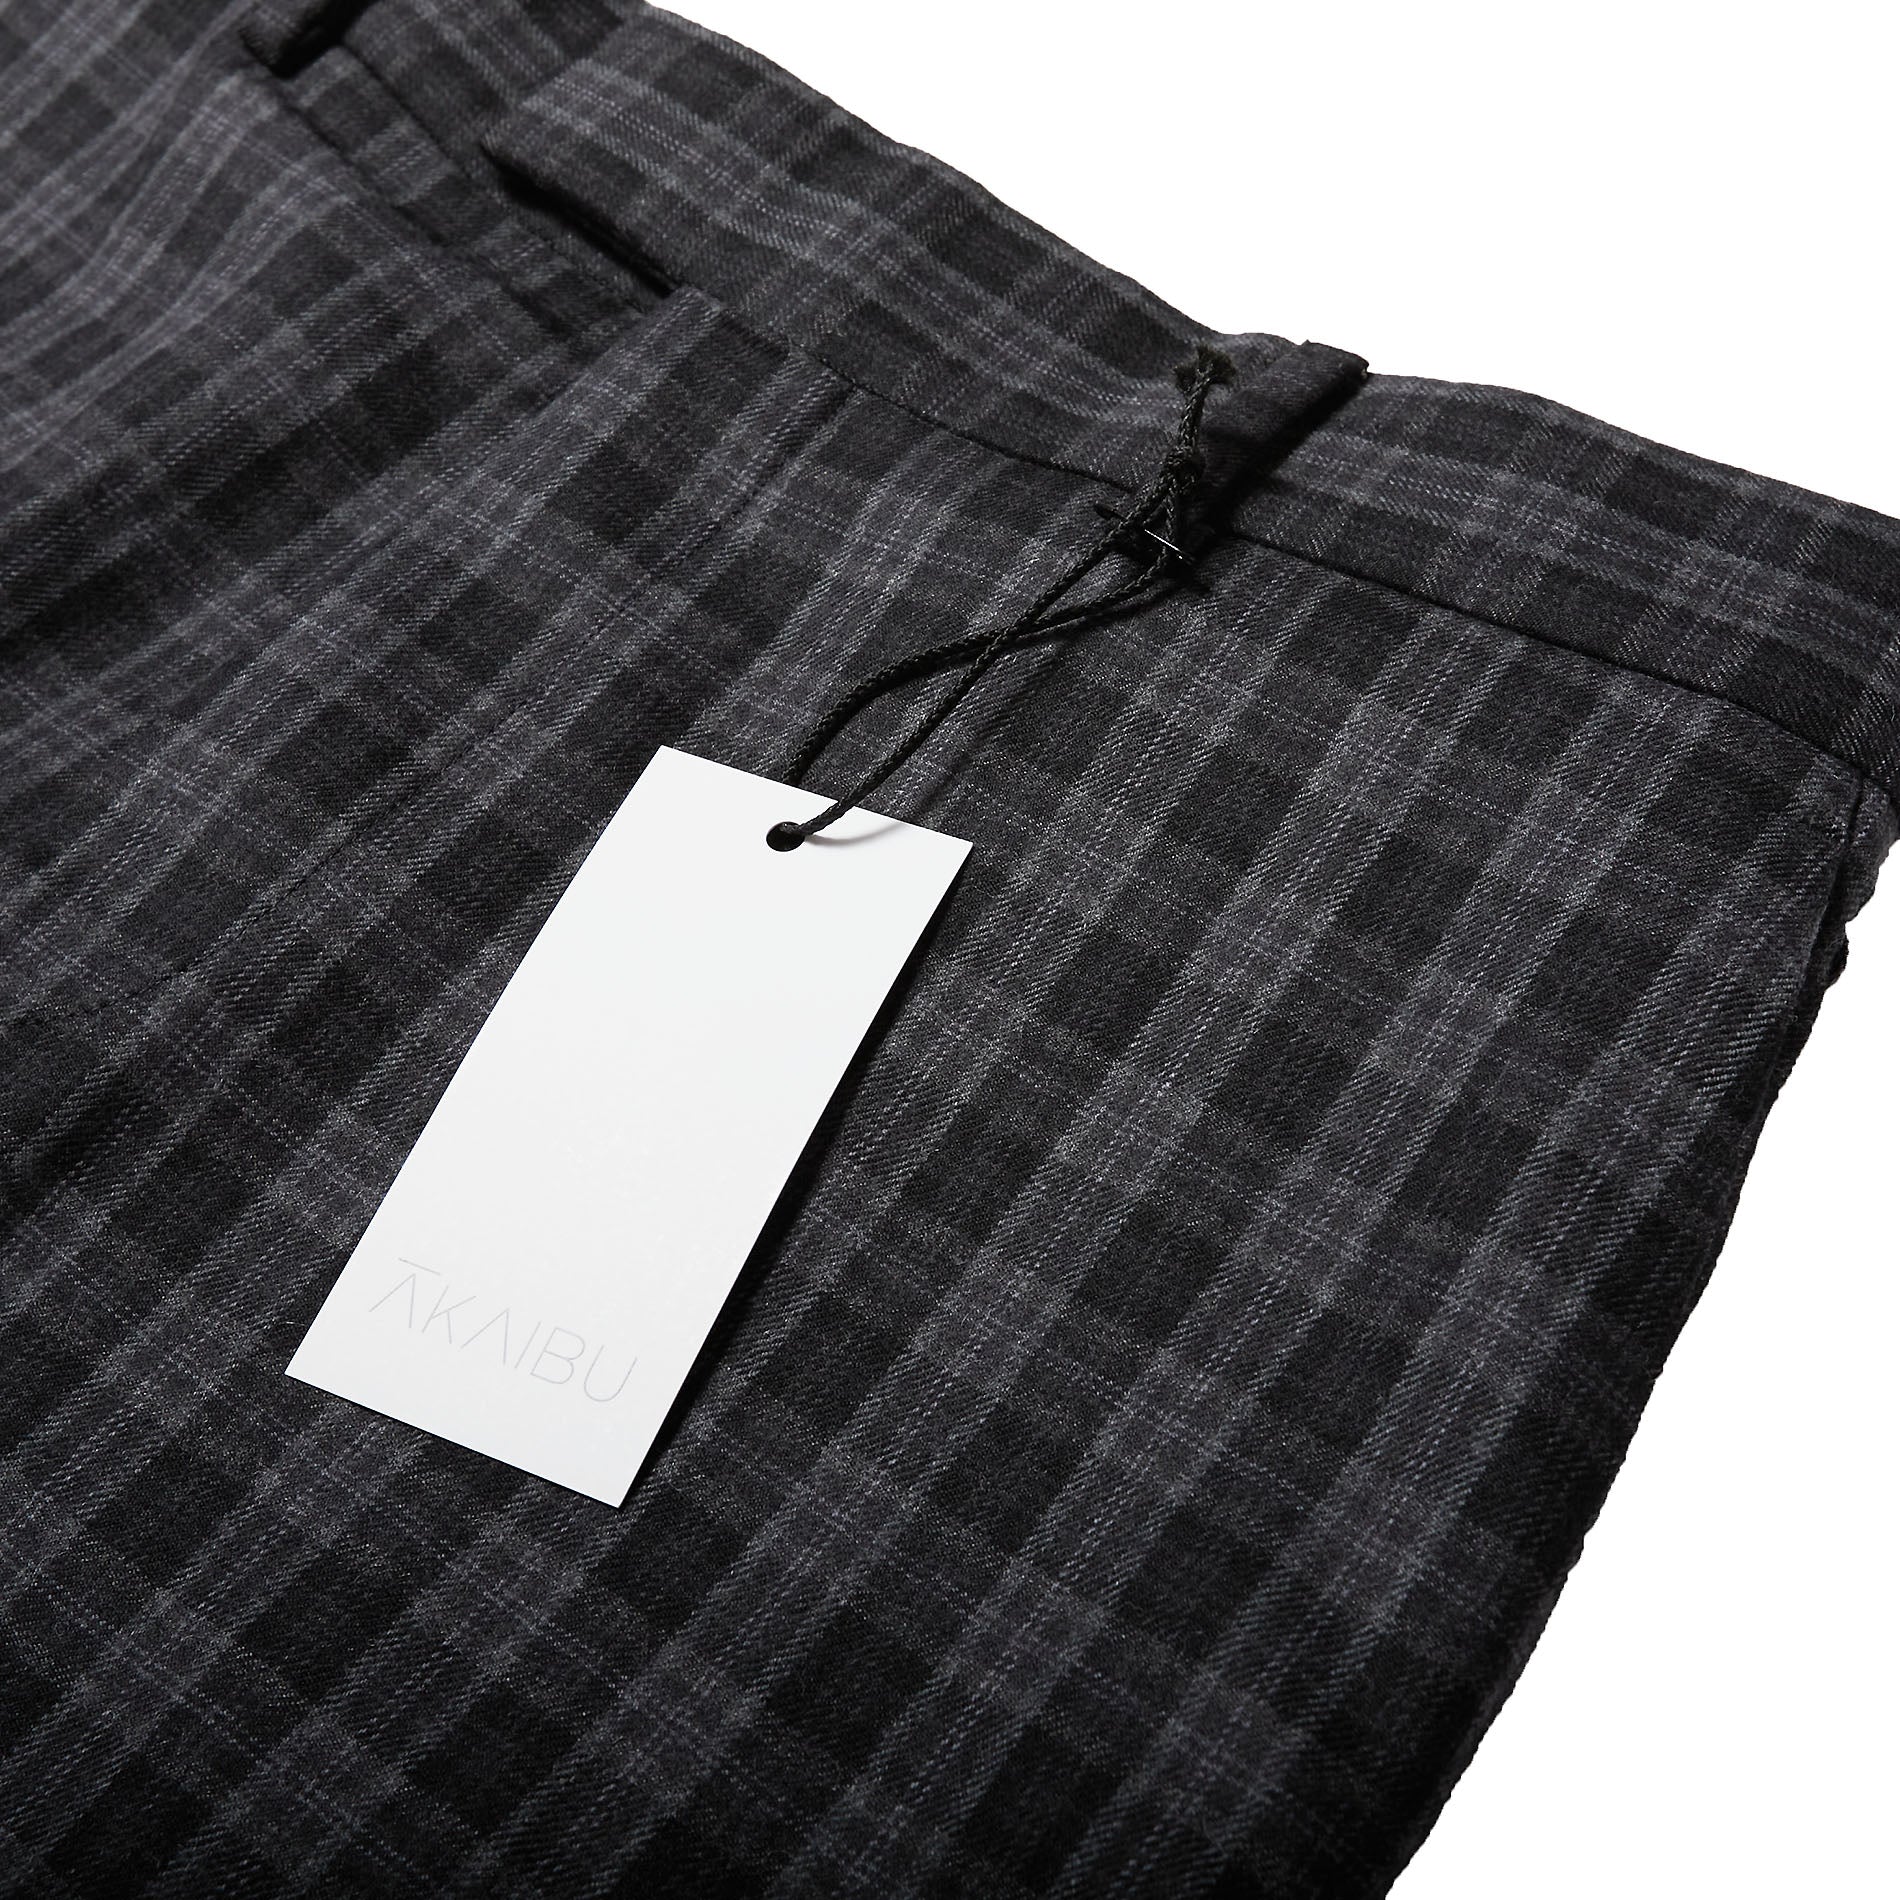 Louis Vuitton FW17 Runway Checkered Wool Pants - Ākaibu Store